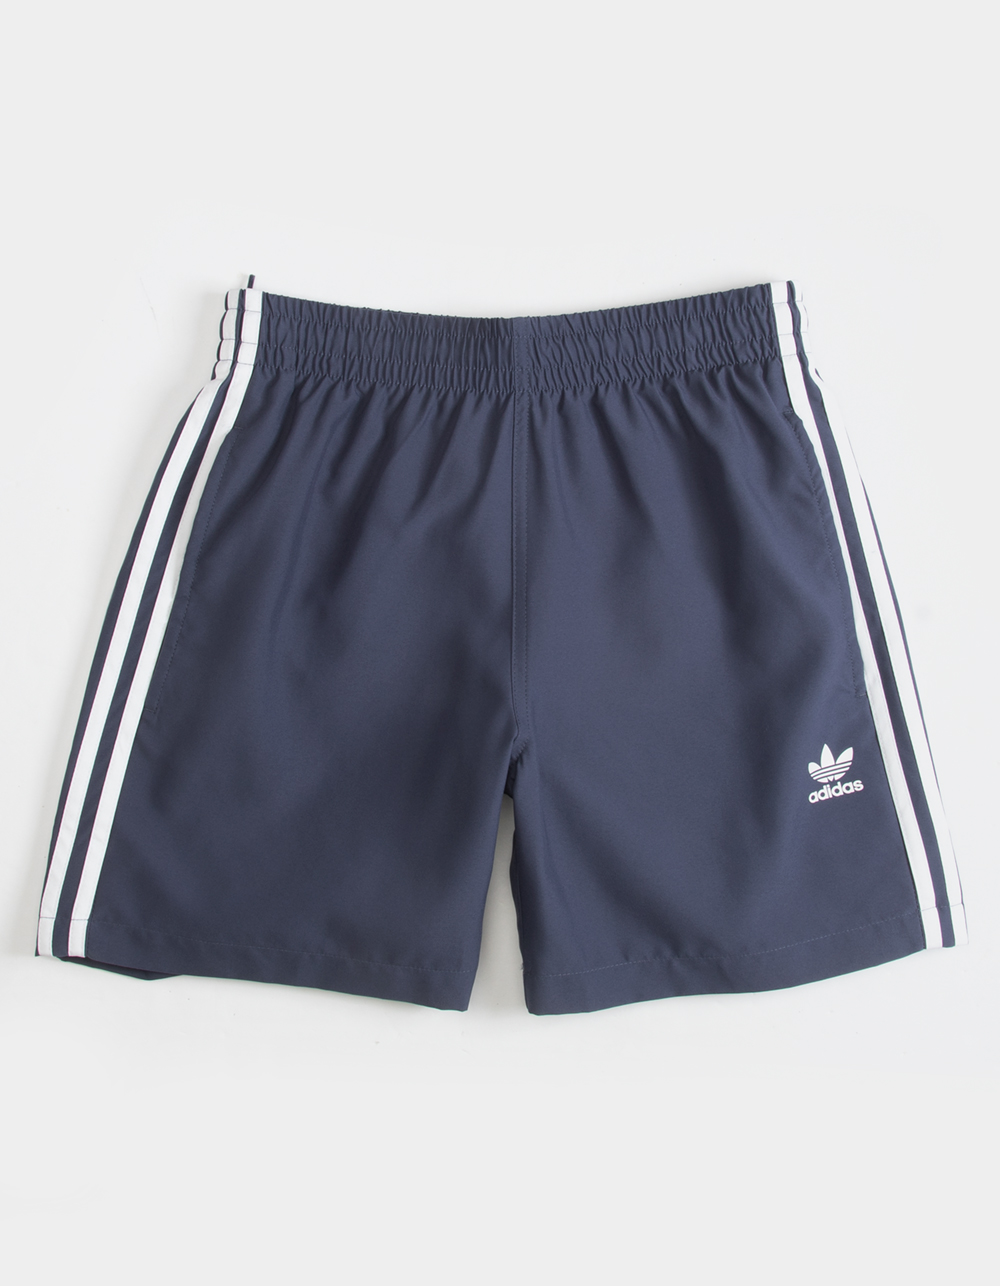 ADIDAS Originals 3-Stripes Mens Swim Shorts - NAVY | Tillys